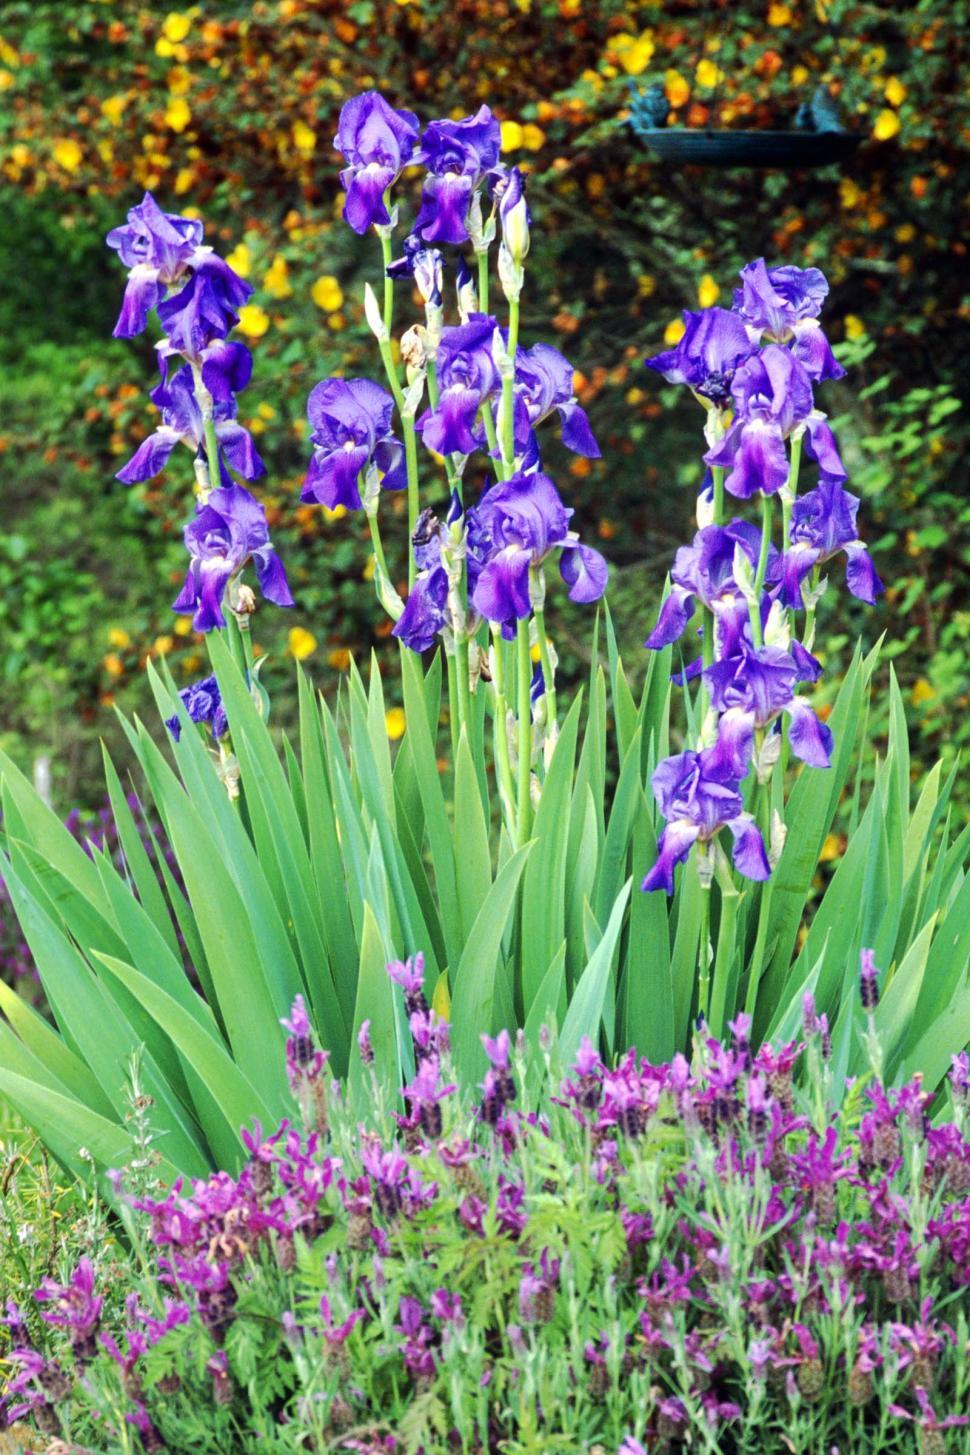 Free Image of iris flowers blooms purple blossoms plants garden 